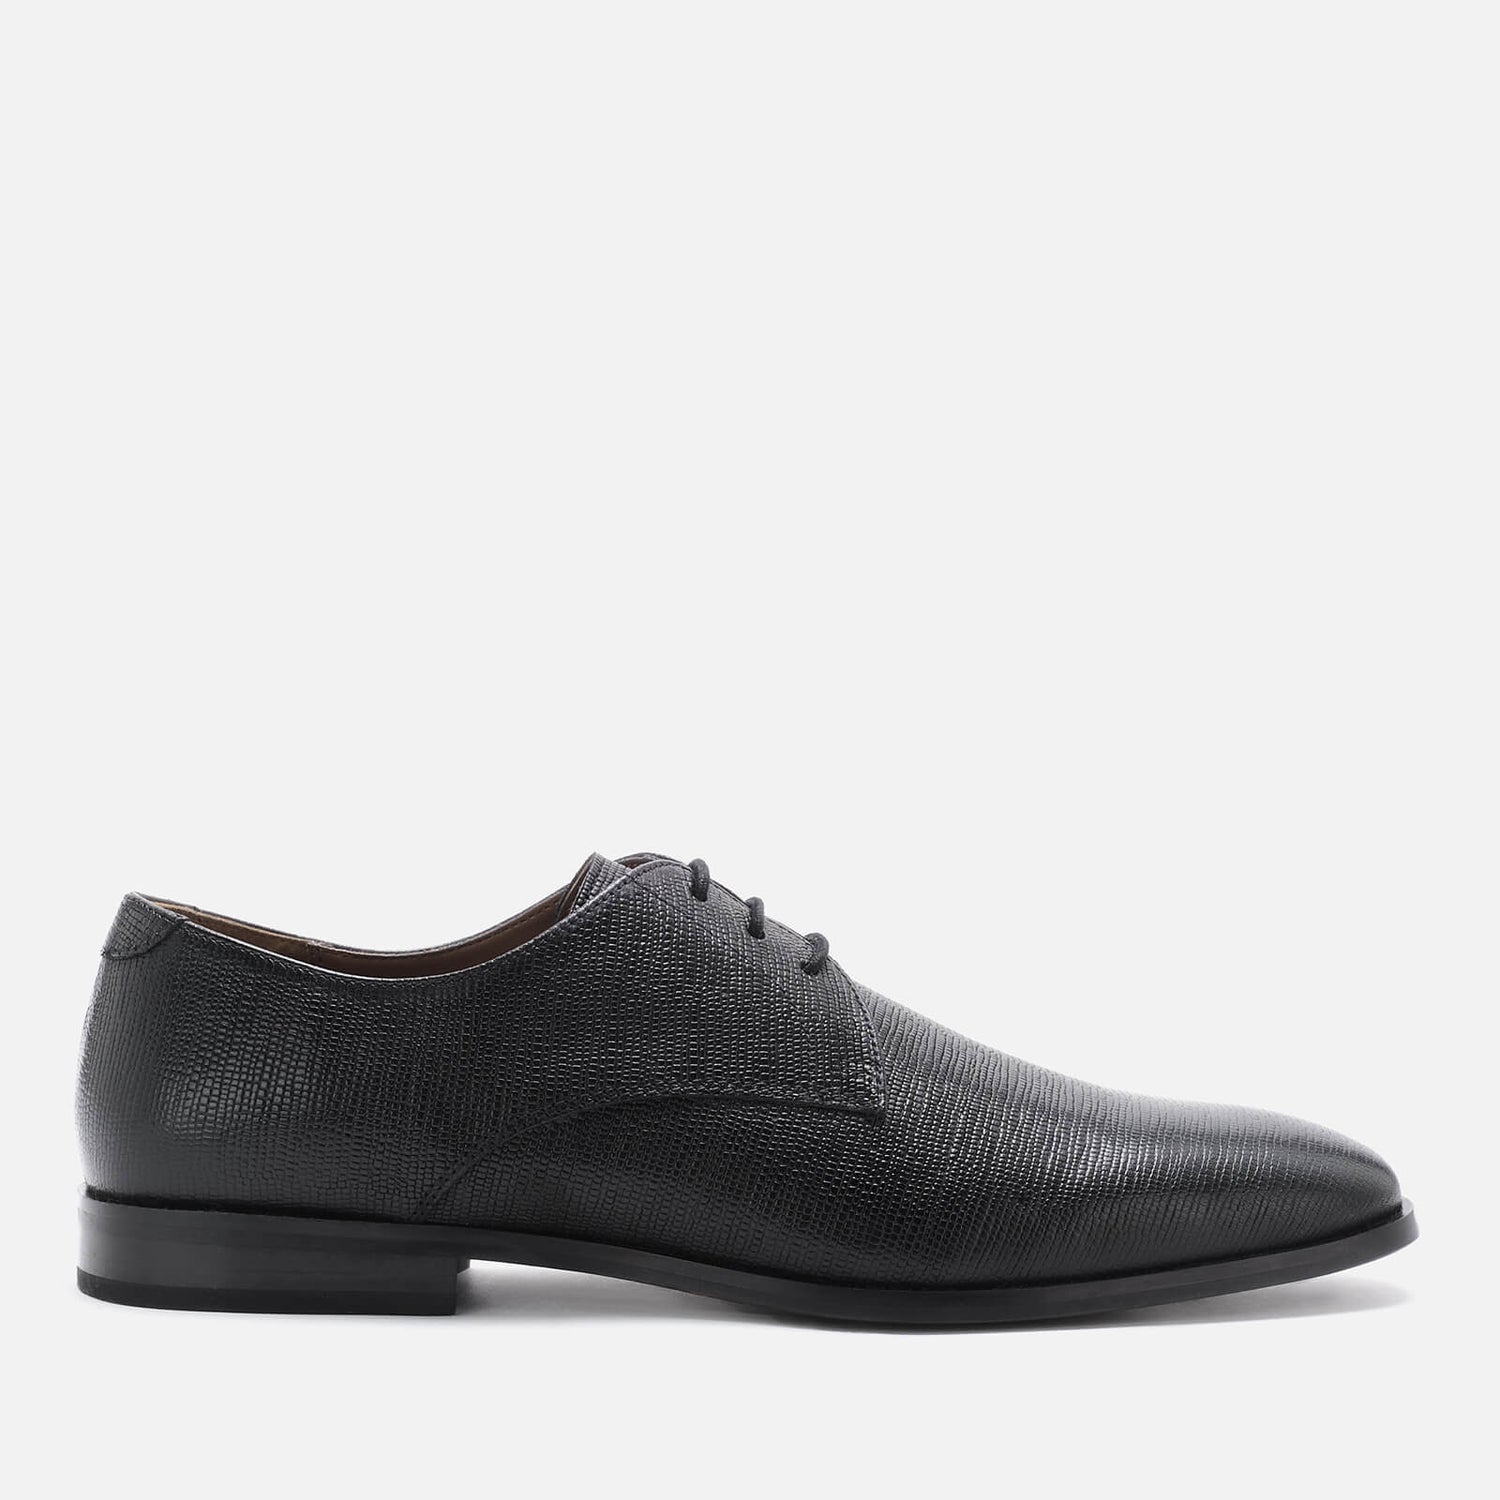 Walk London Men's Florence Etched Leather Derby Shoes - Black - UK 7